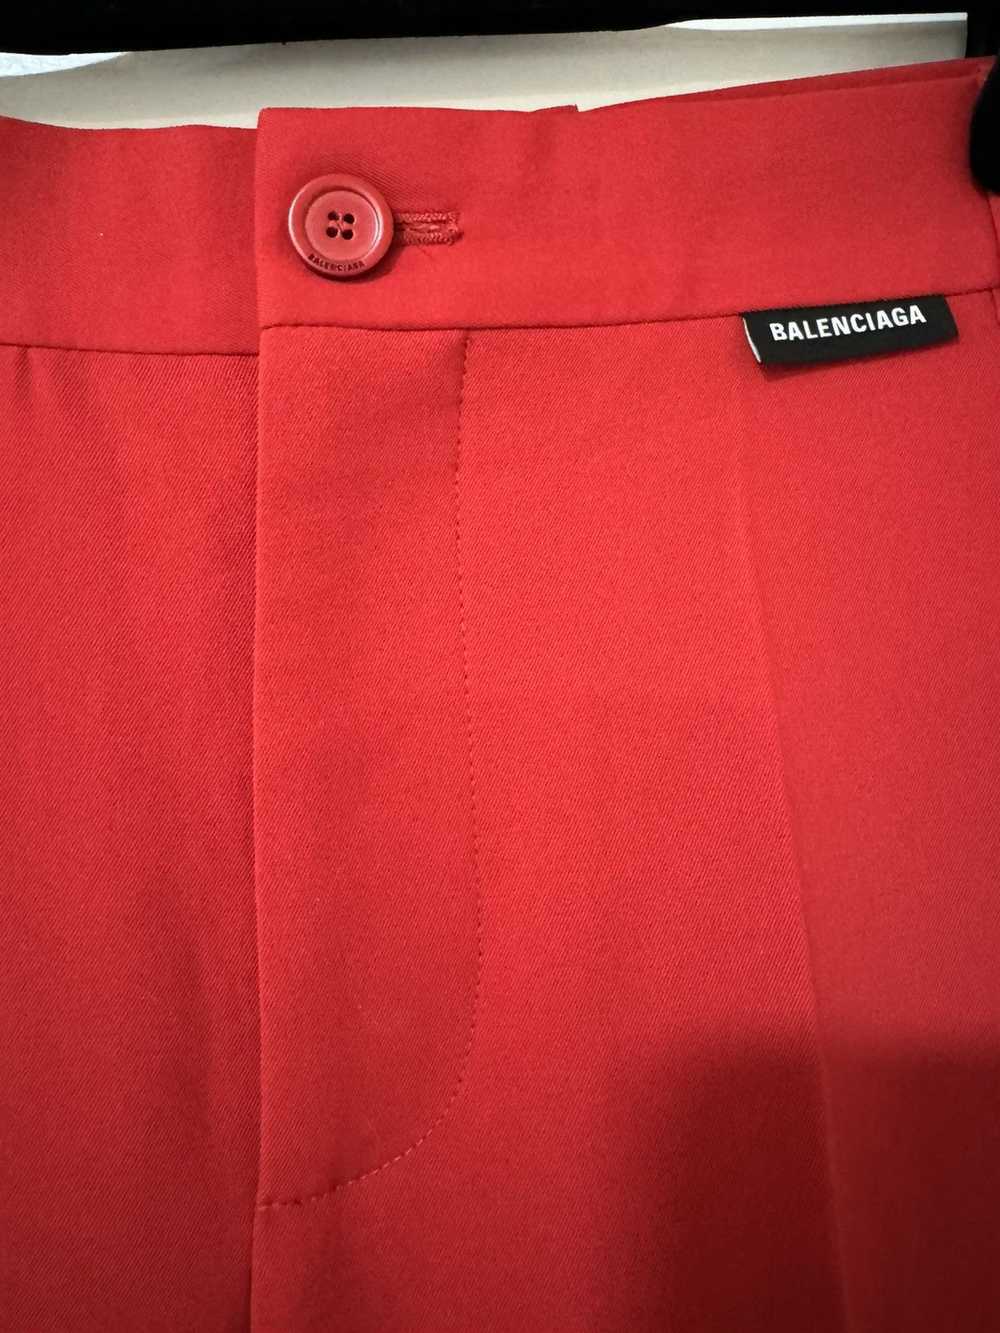 Balenciaga SS19 Red Fluid Trouser - image 4